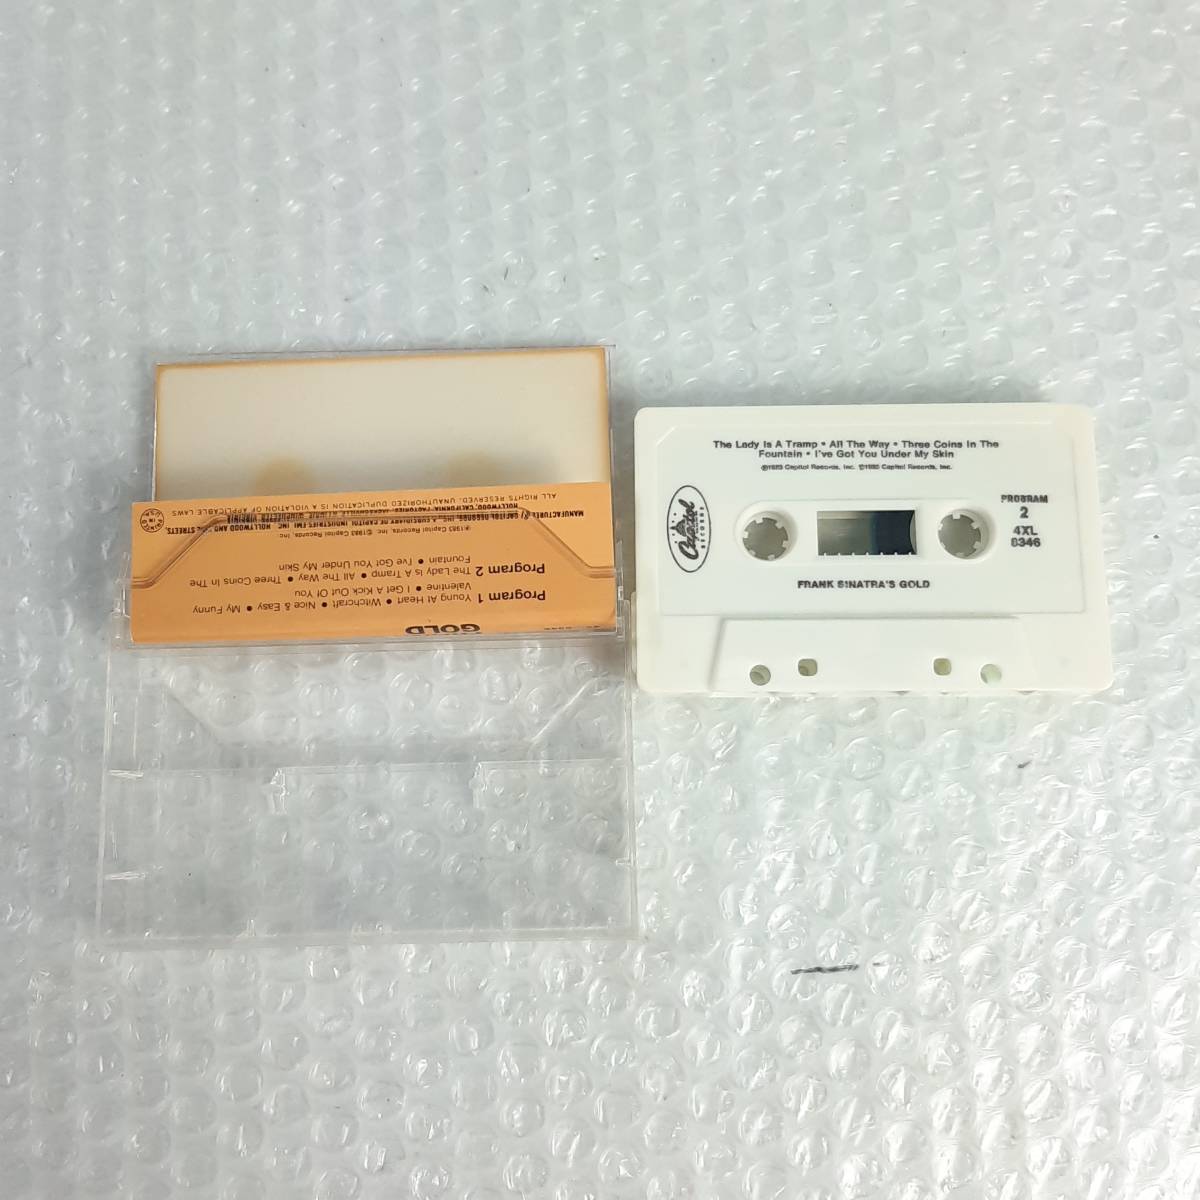 FRANK SINATRA Frank *sina tiger GOLD cassette tape cassette 4XL-8346 overseas edition 